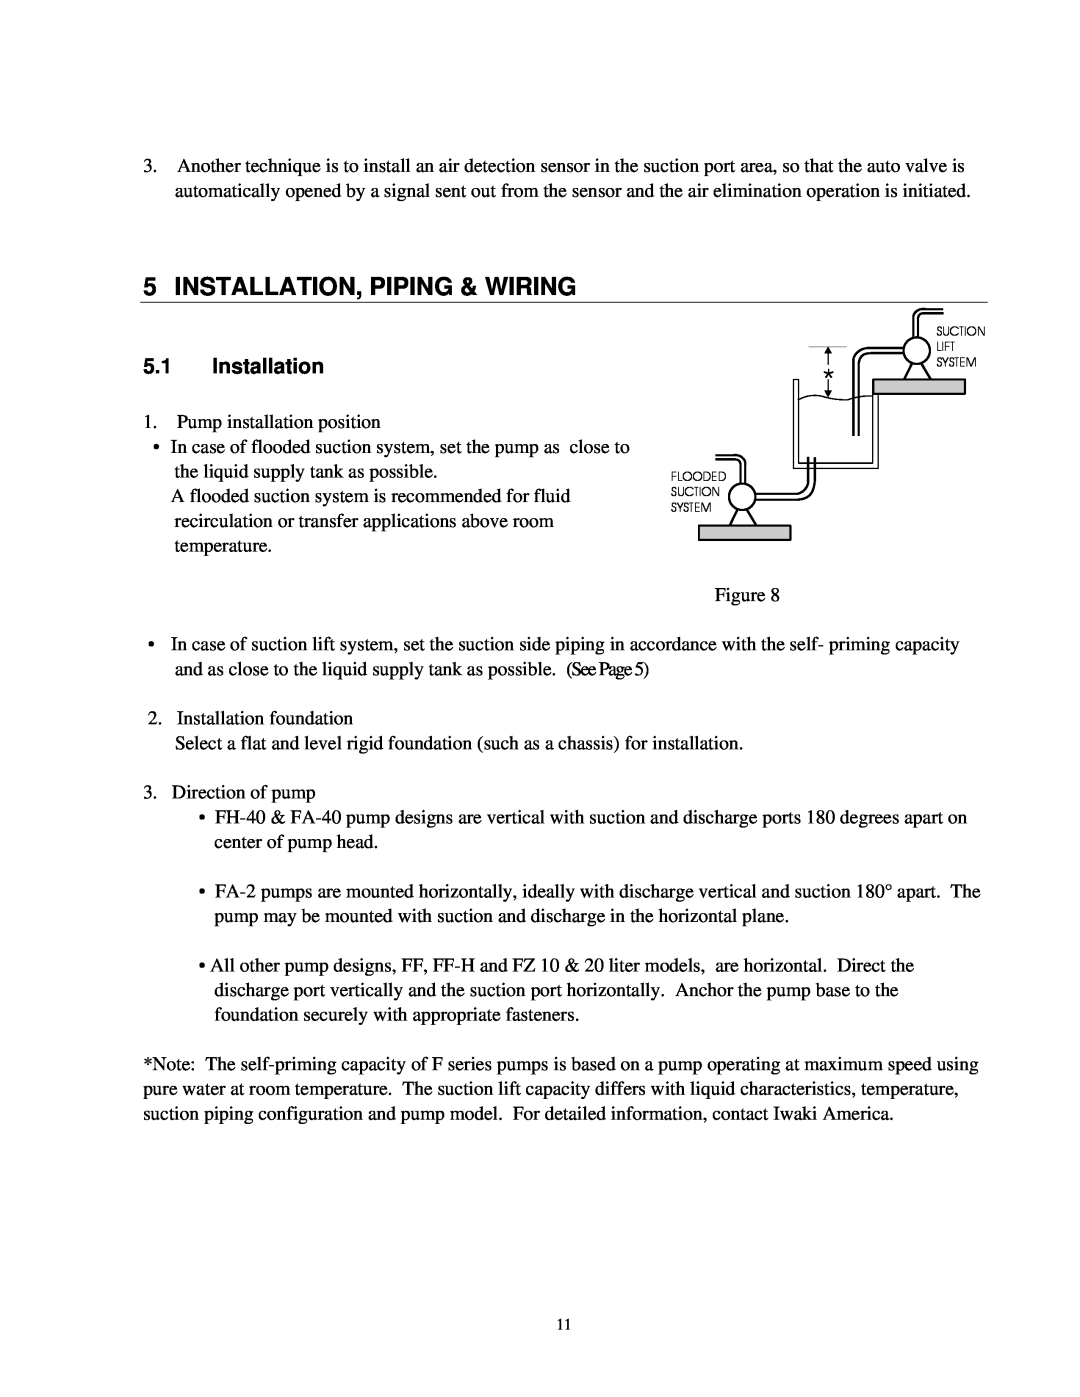 Raymarine FA-2E instruction manual Installation, Piping & Wiring, 5.1Installation 